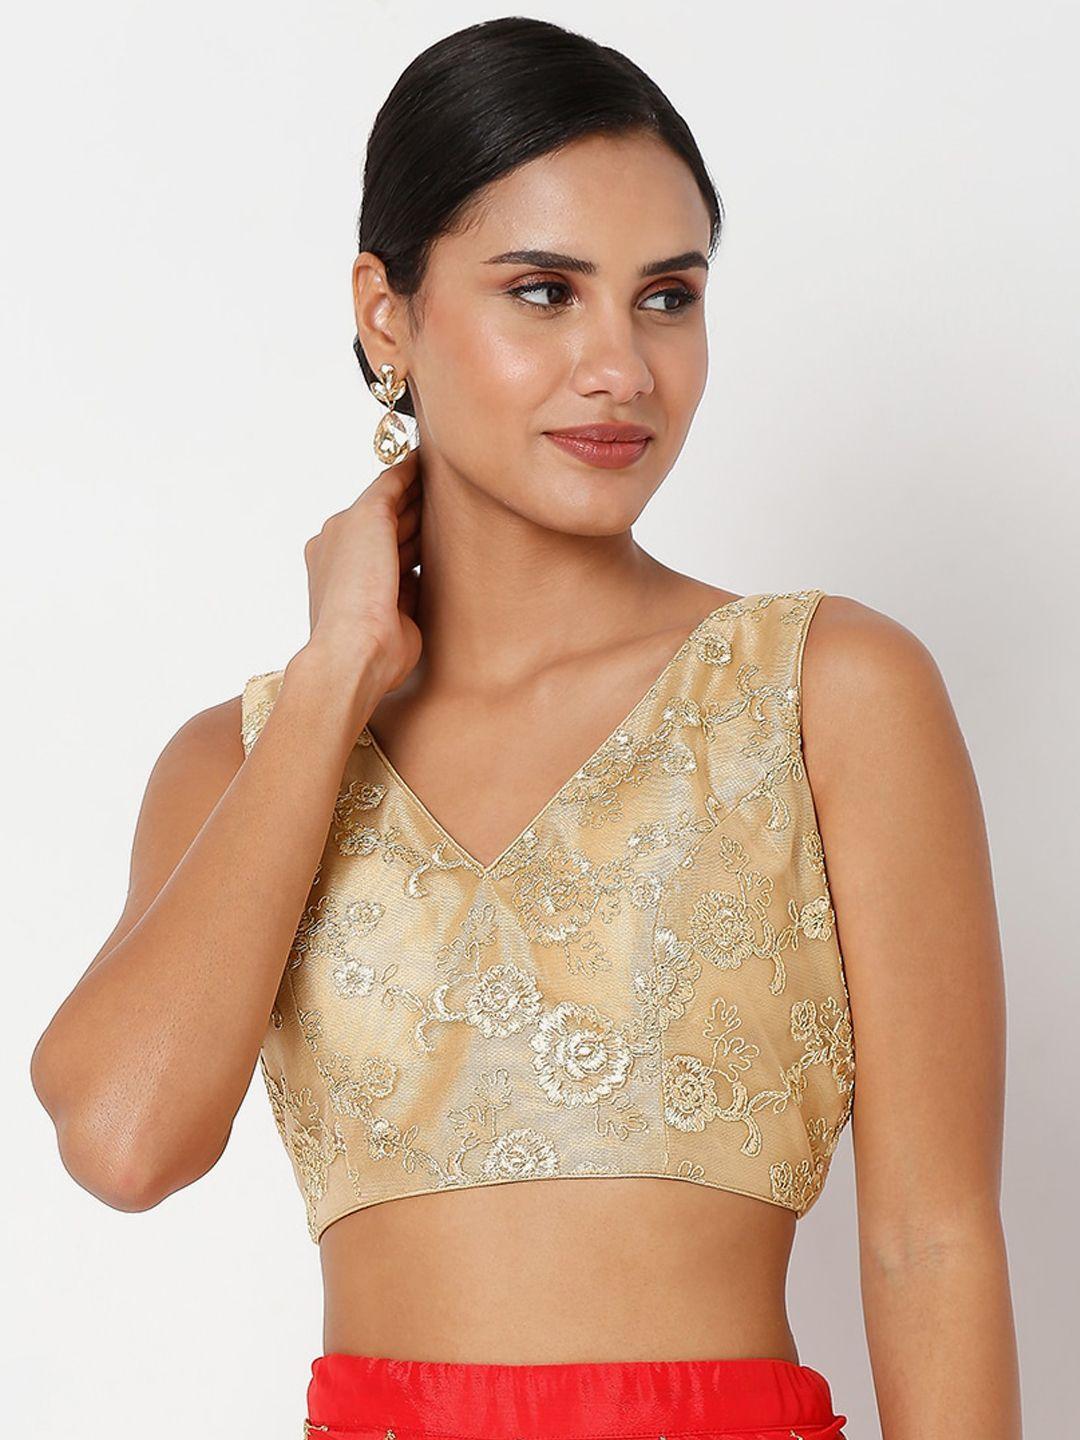 salwar studio women gold coloured embellished saree blouse